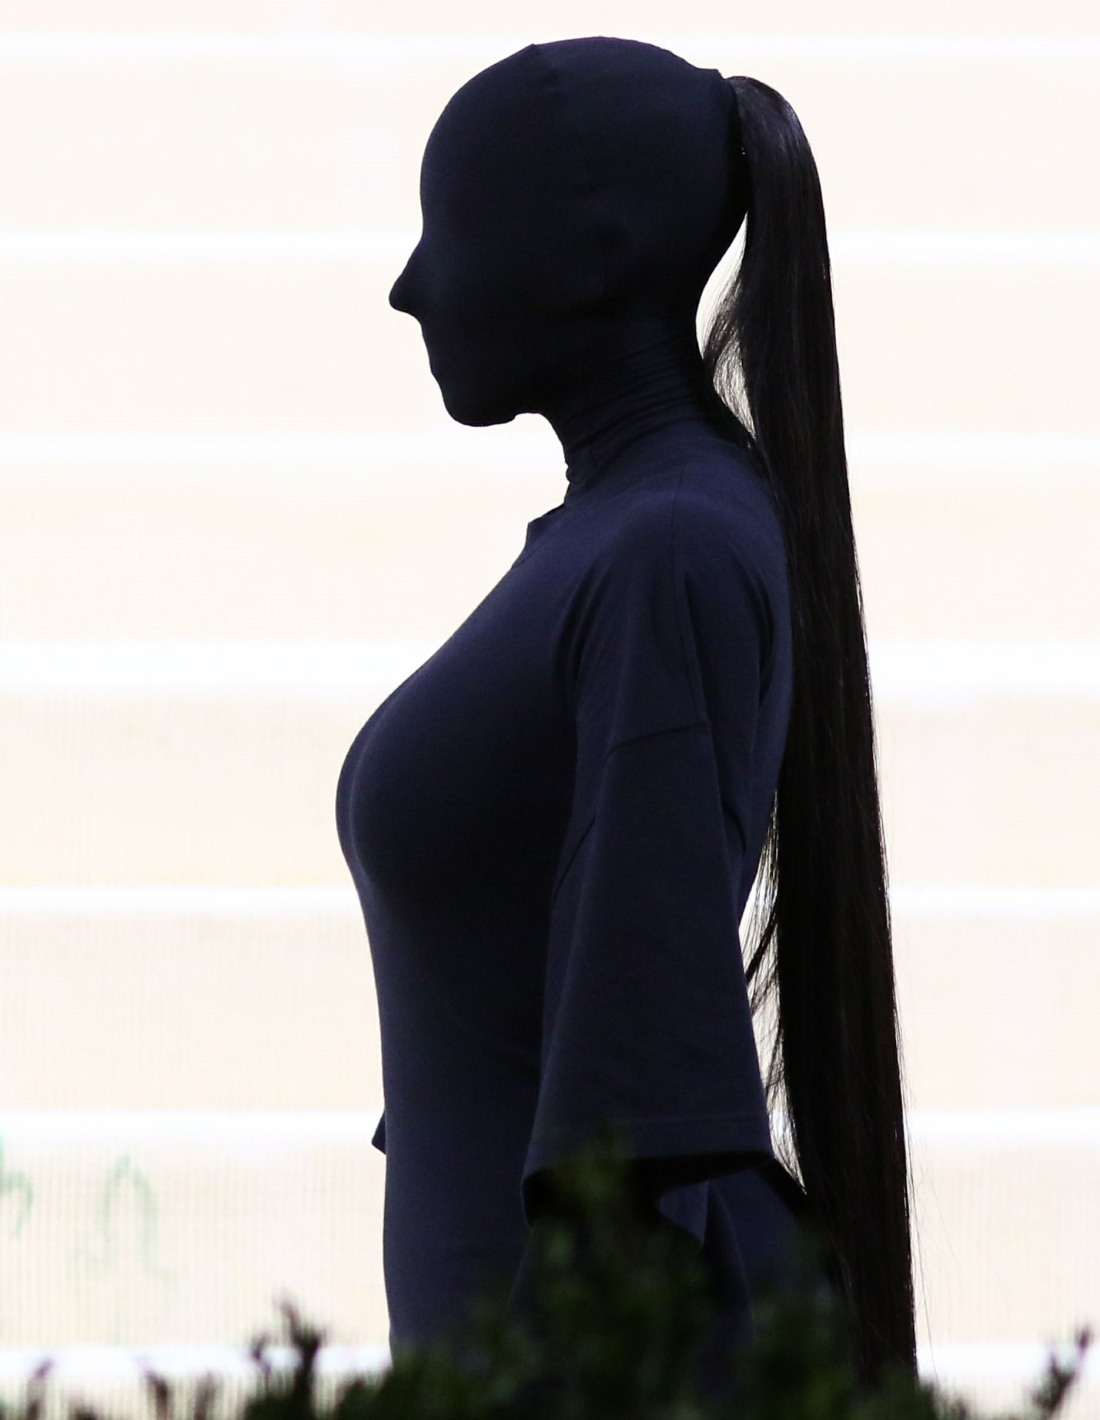 Kim Kardashian and Kendall Jenner attend the Met Gala